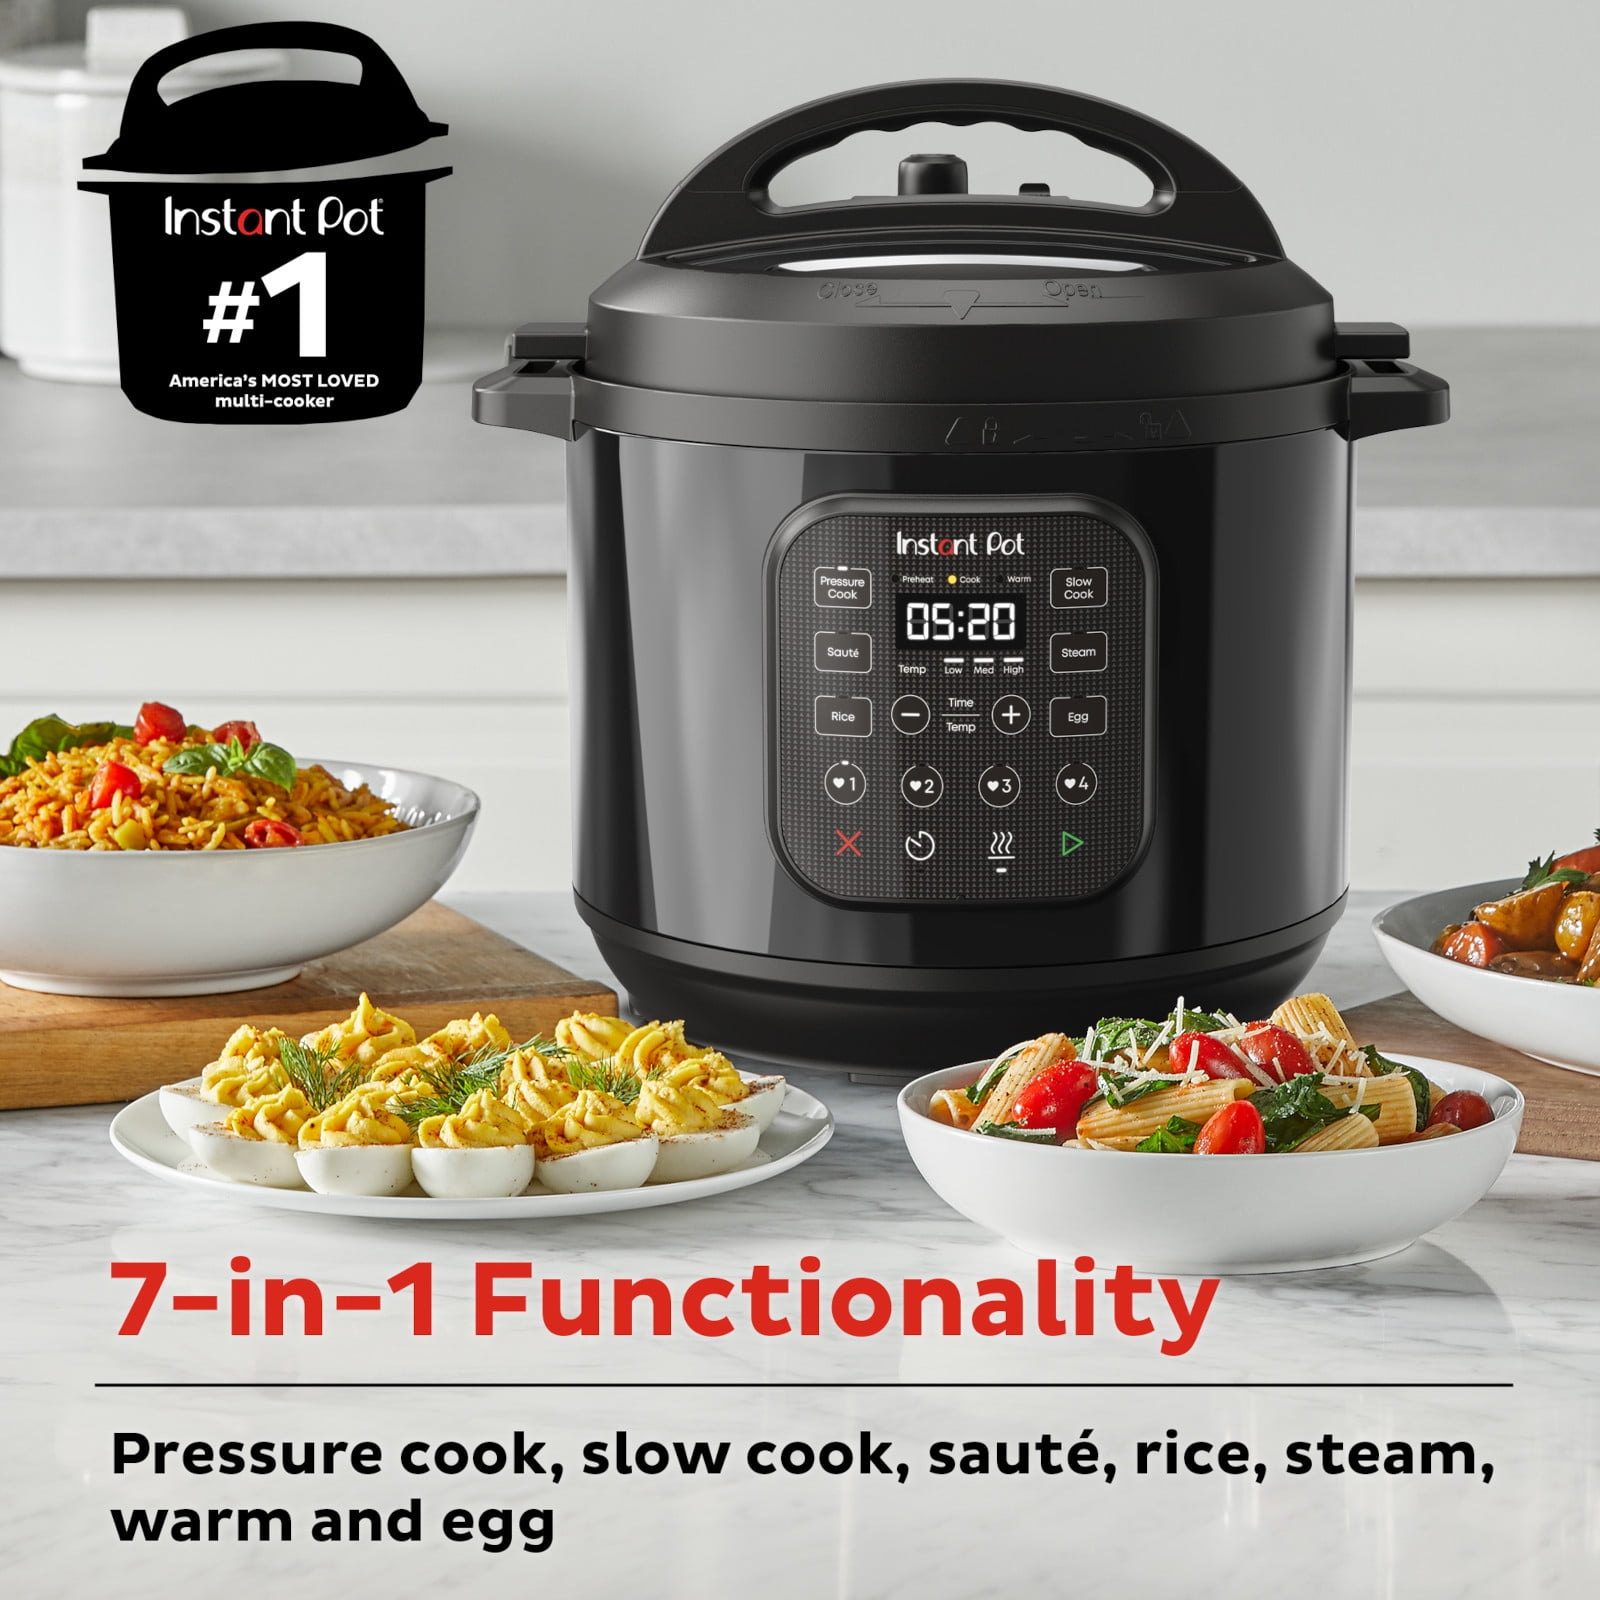 8 qt Instant Pot 7-in-1 Multi-Functional Pressure Cooker $89